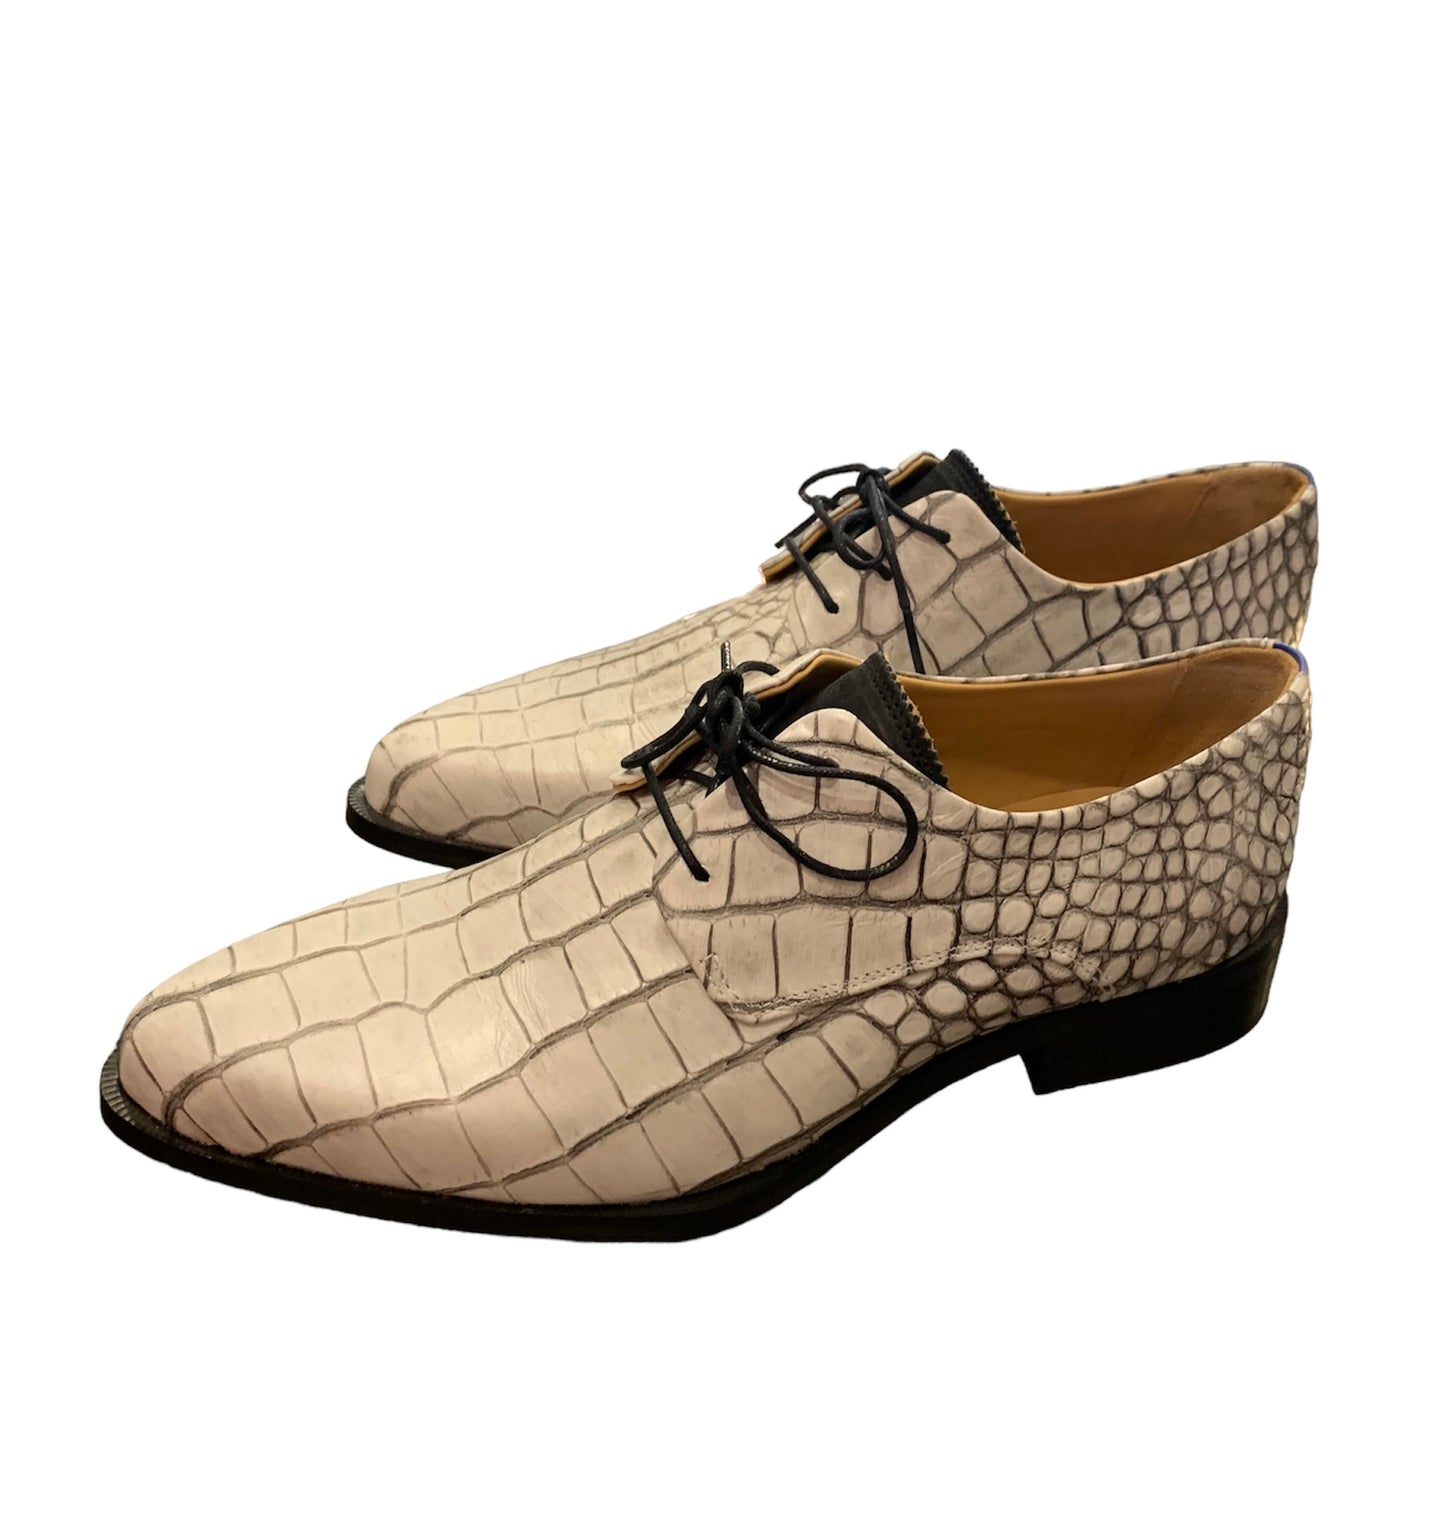 Modern Snakeskin Print Leather Loafers by John Fluevog